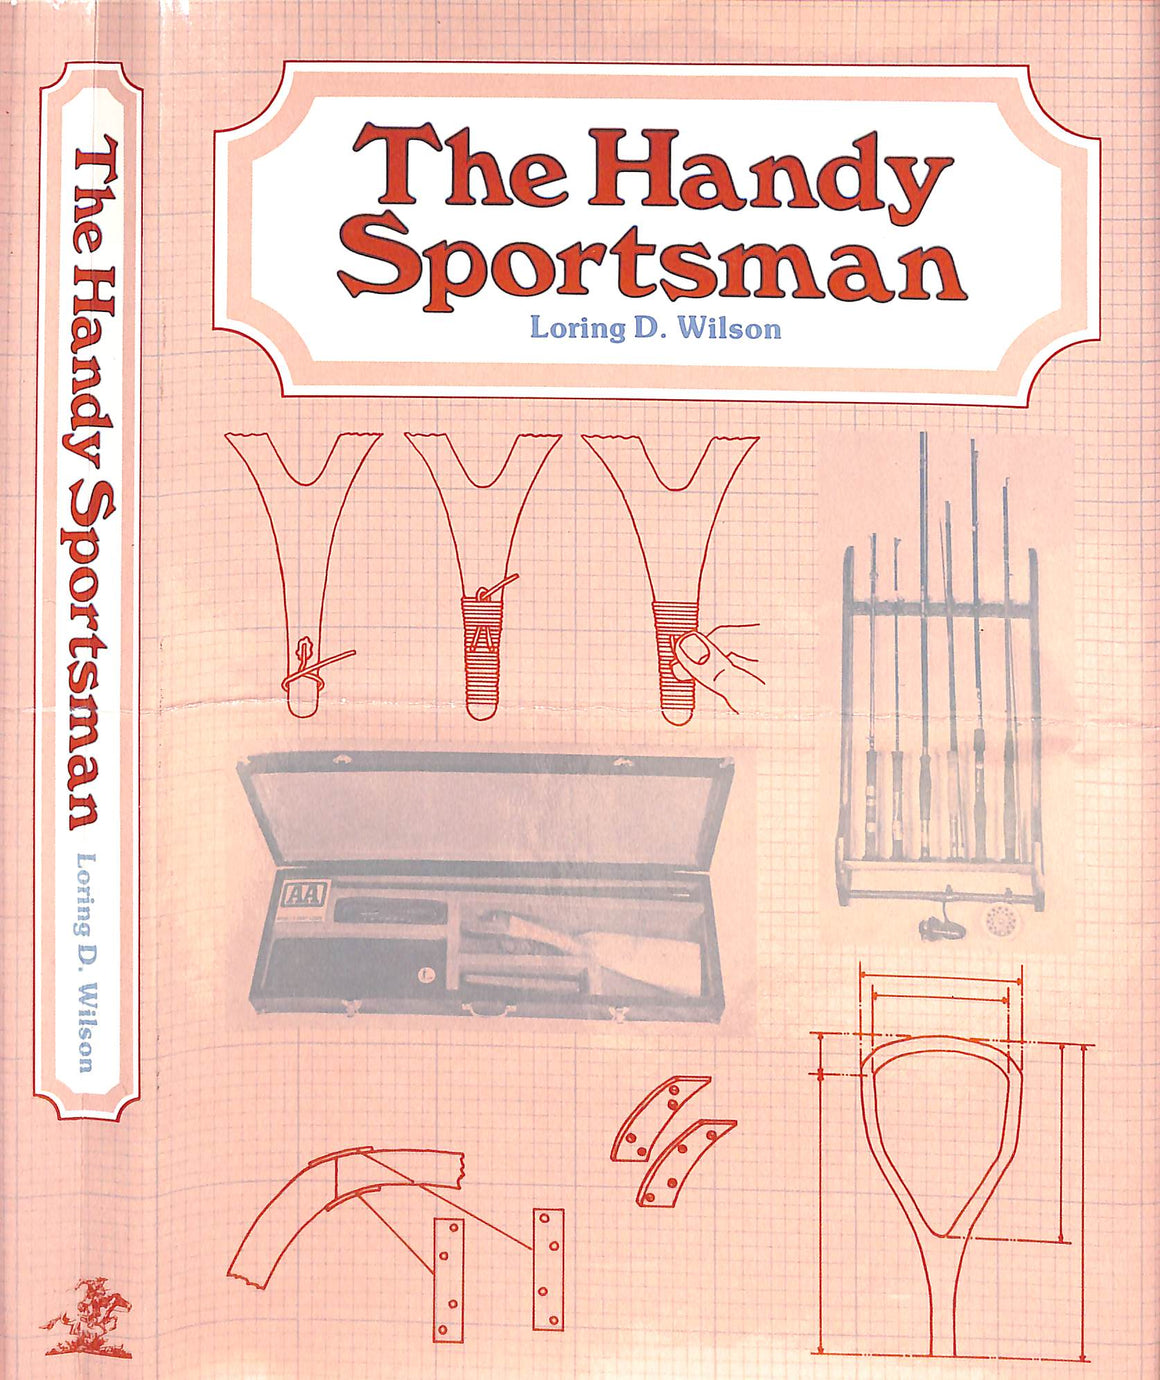 "The Handy Sportsman" 1976 WILSON, Loring D.